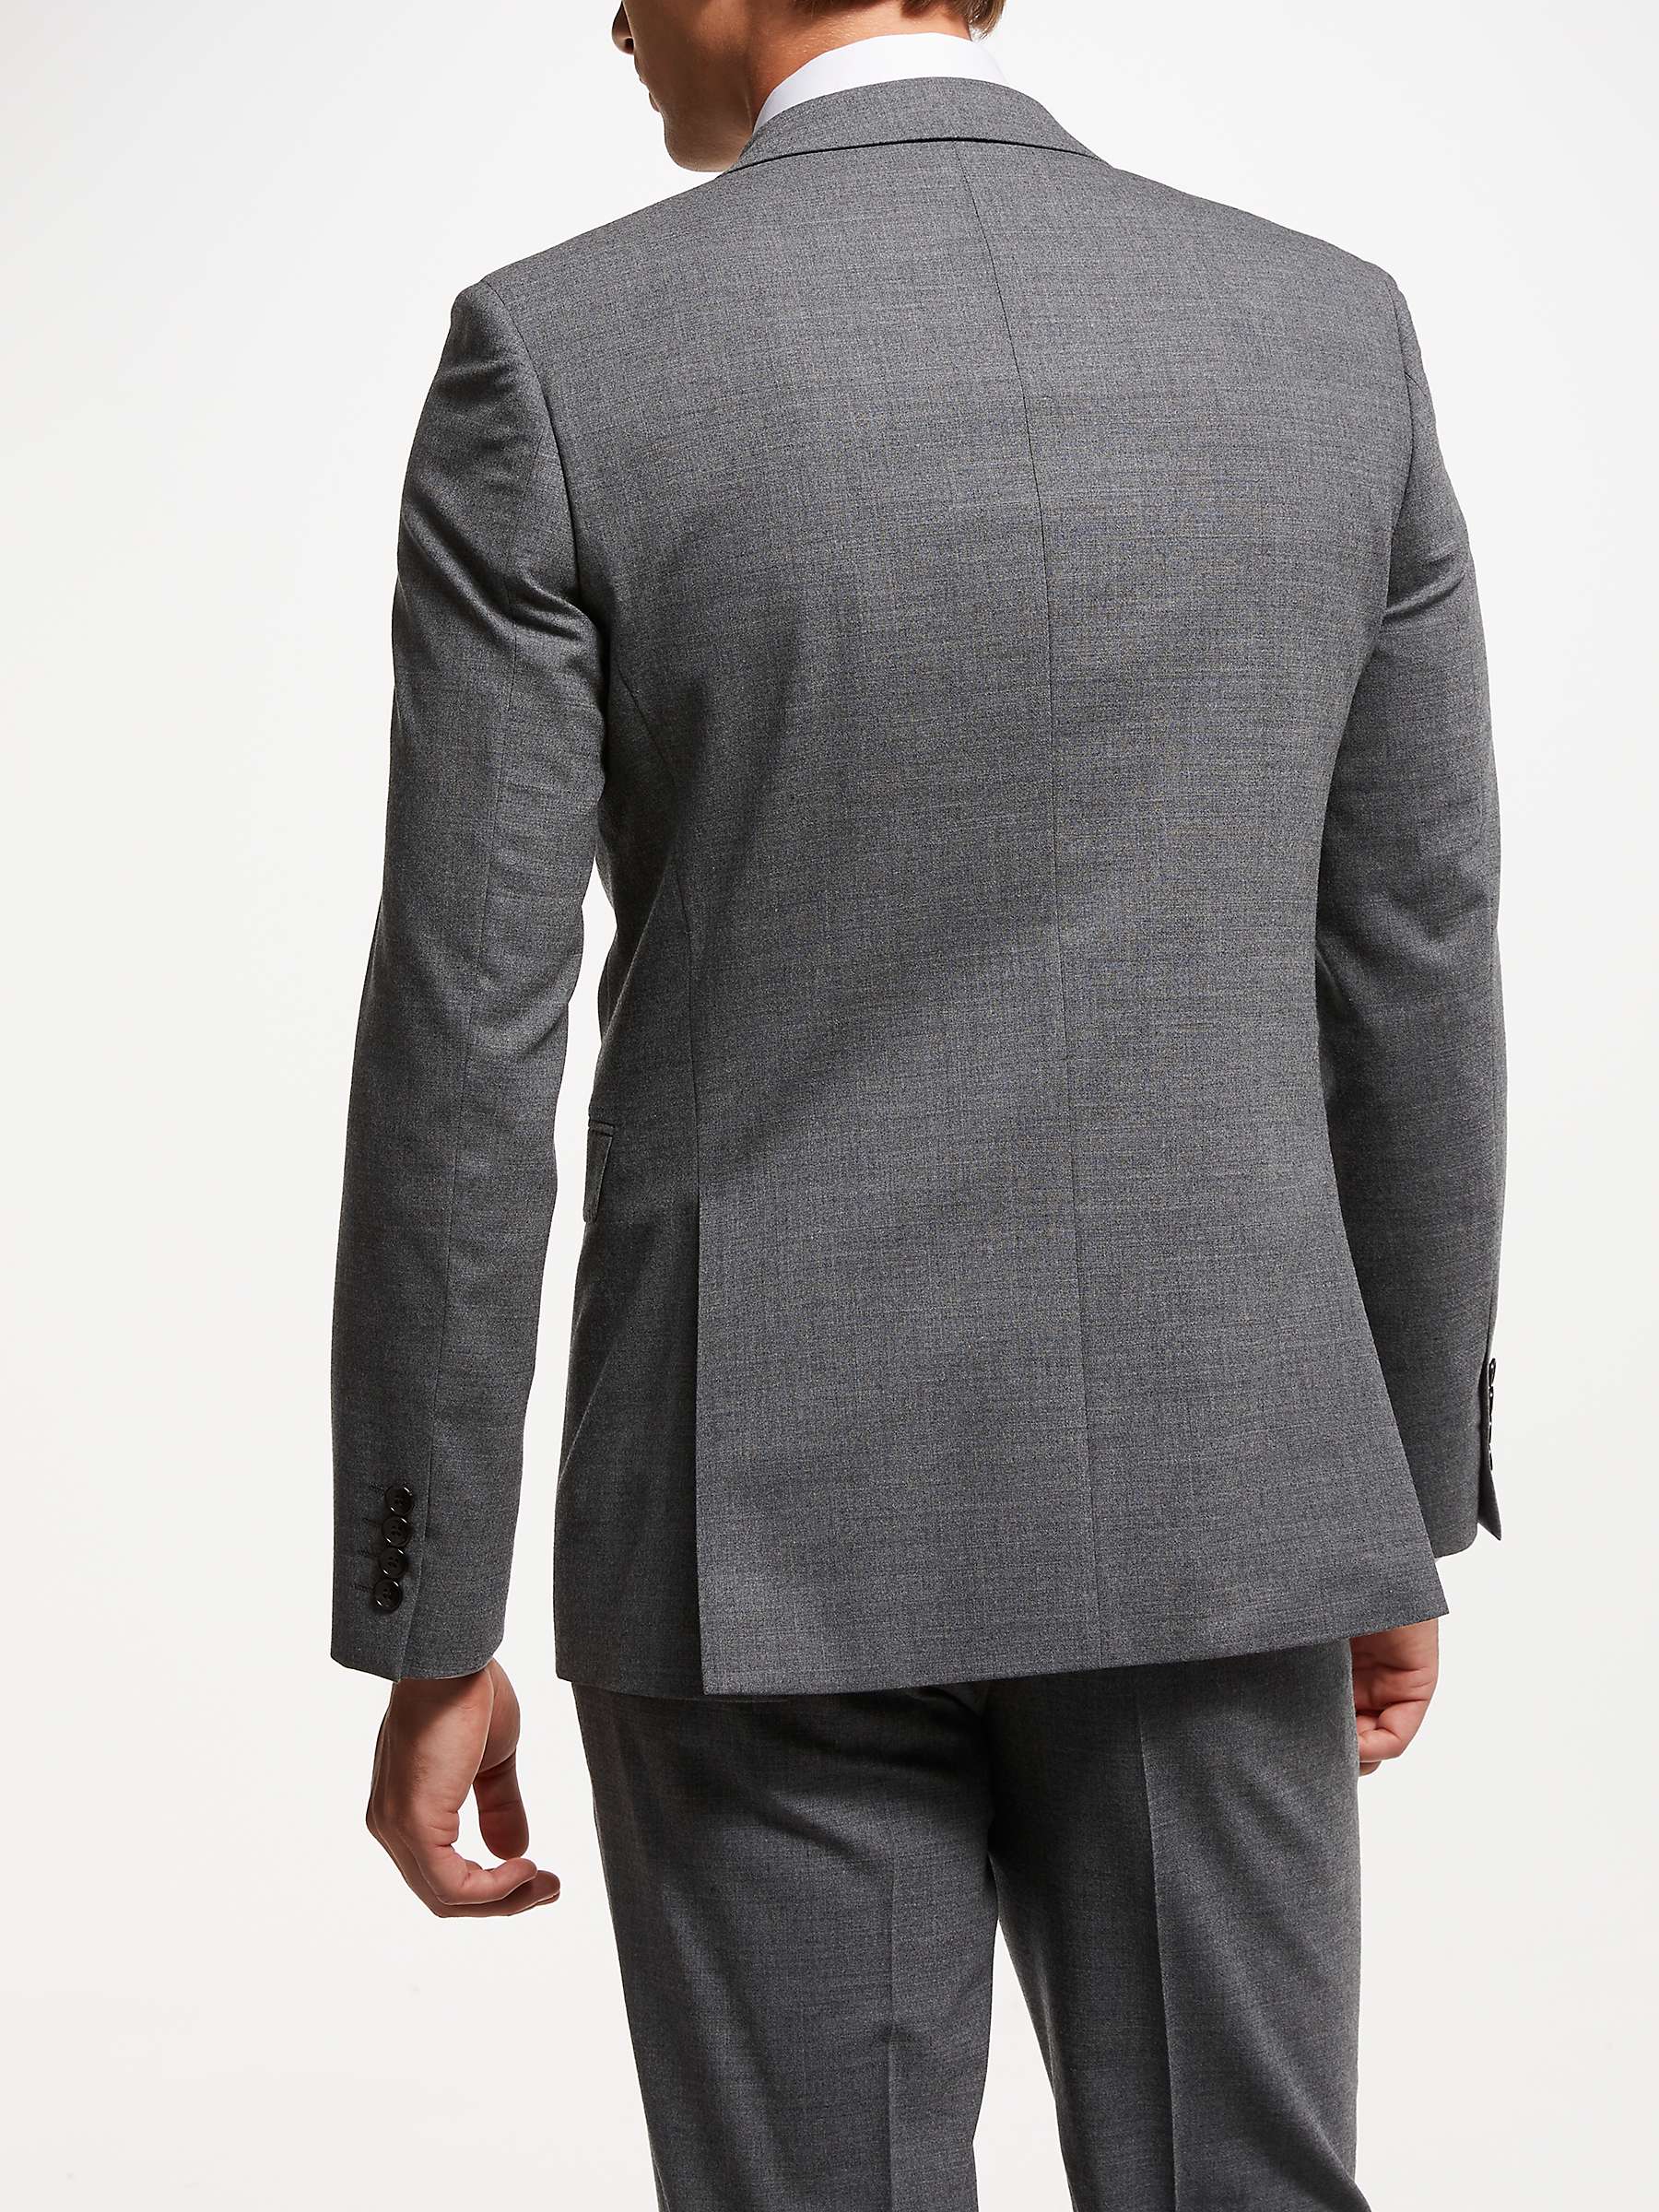 John Lewis & Partners Tailored Suit Jacket, Mid Grey at John Lewis ...